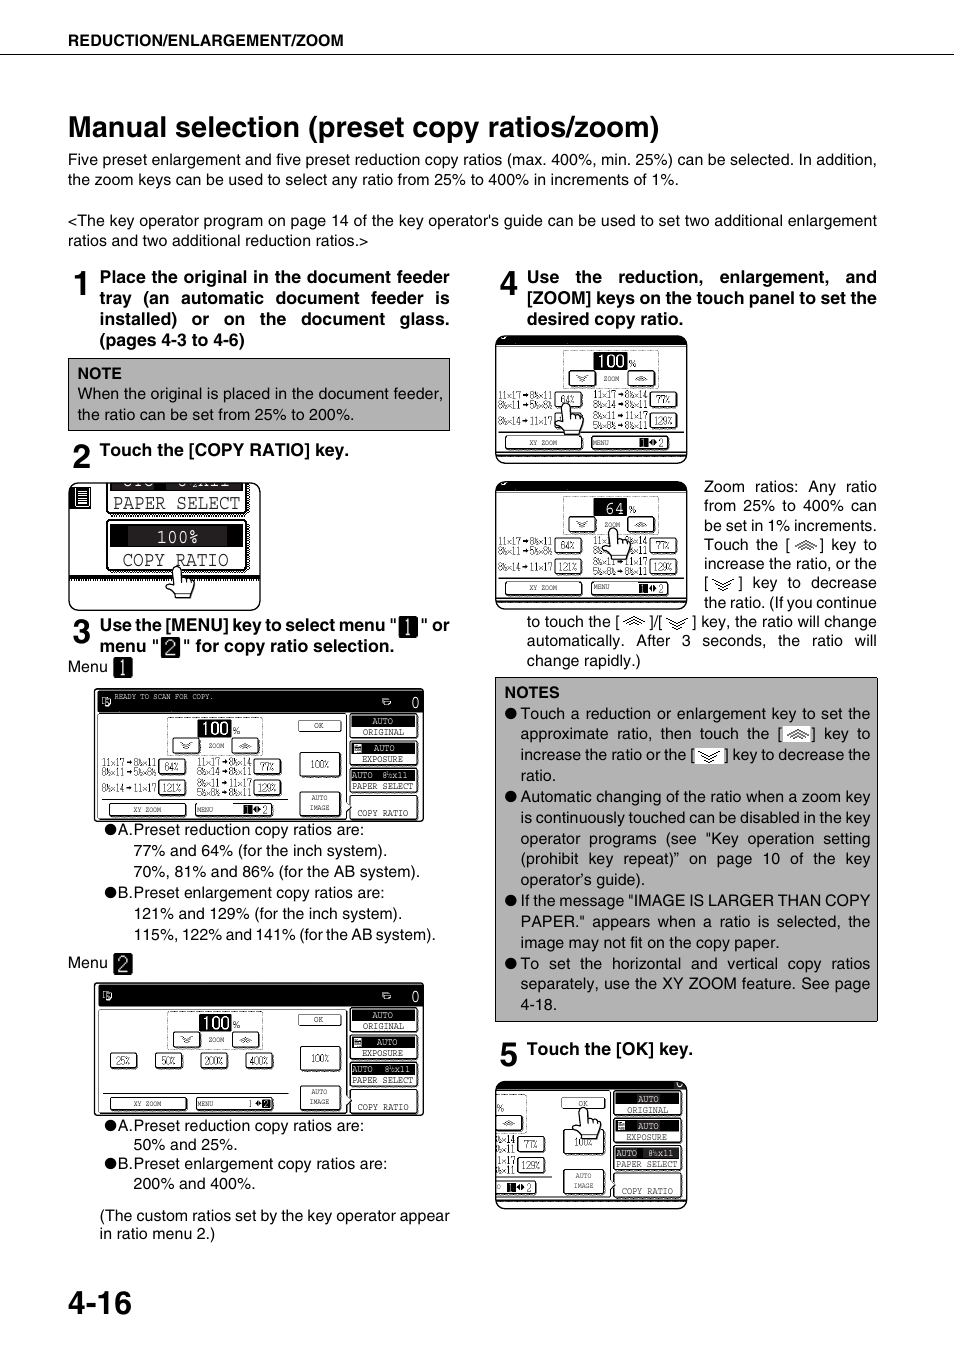 Manual selection (preset copy ratios/zoom), Ge 4-16), Paper select copy ratio | Touch the [copy ratio] key, Touch the [ok] key | Sharp AR-M700N User Manual | Page 92 / 172